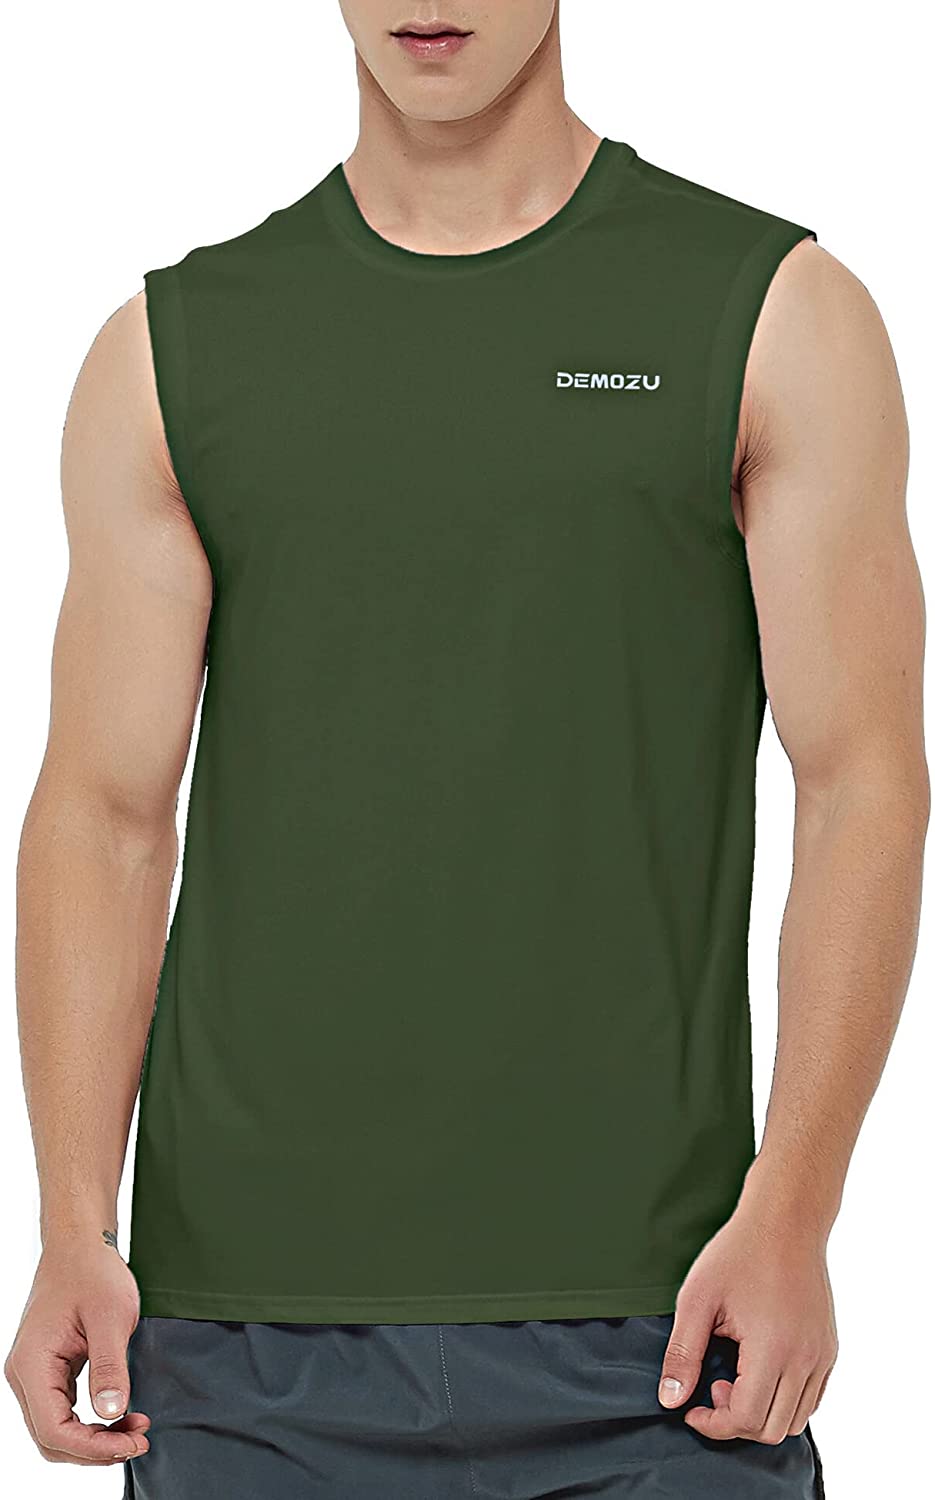 DEMOZU Men's Sleeveless Workout Shirt Swim Beach Pool Tank Top Big